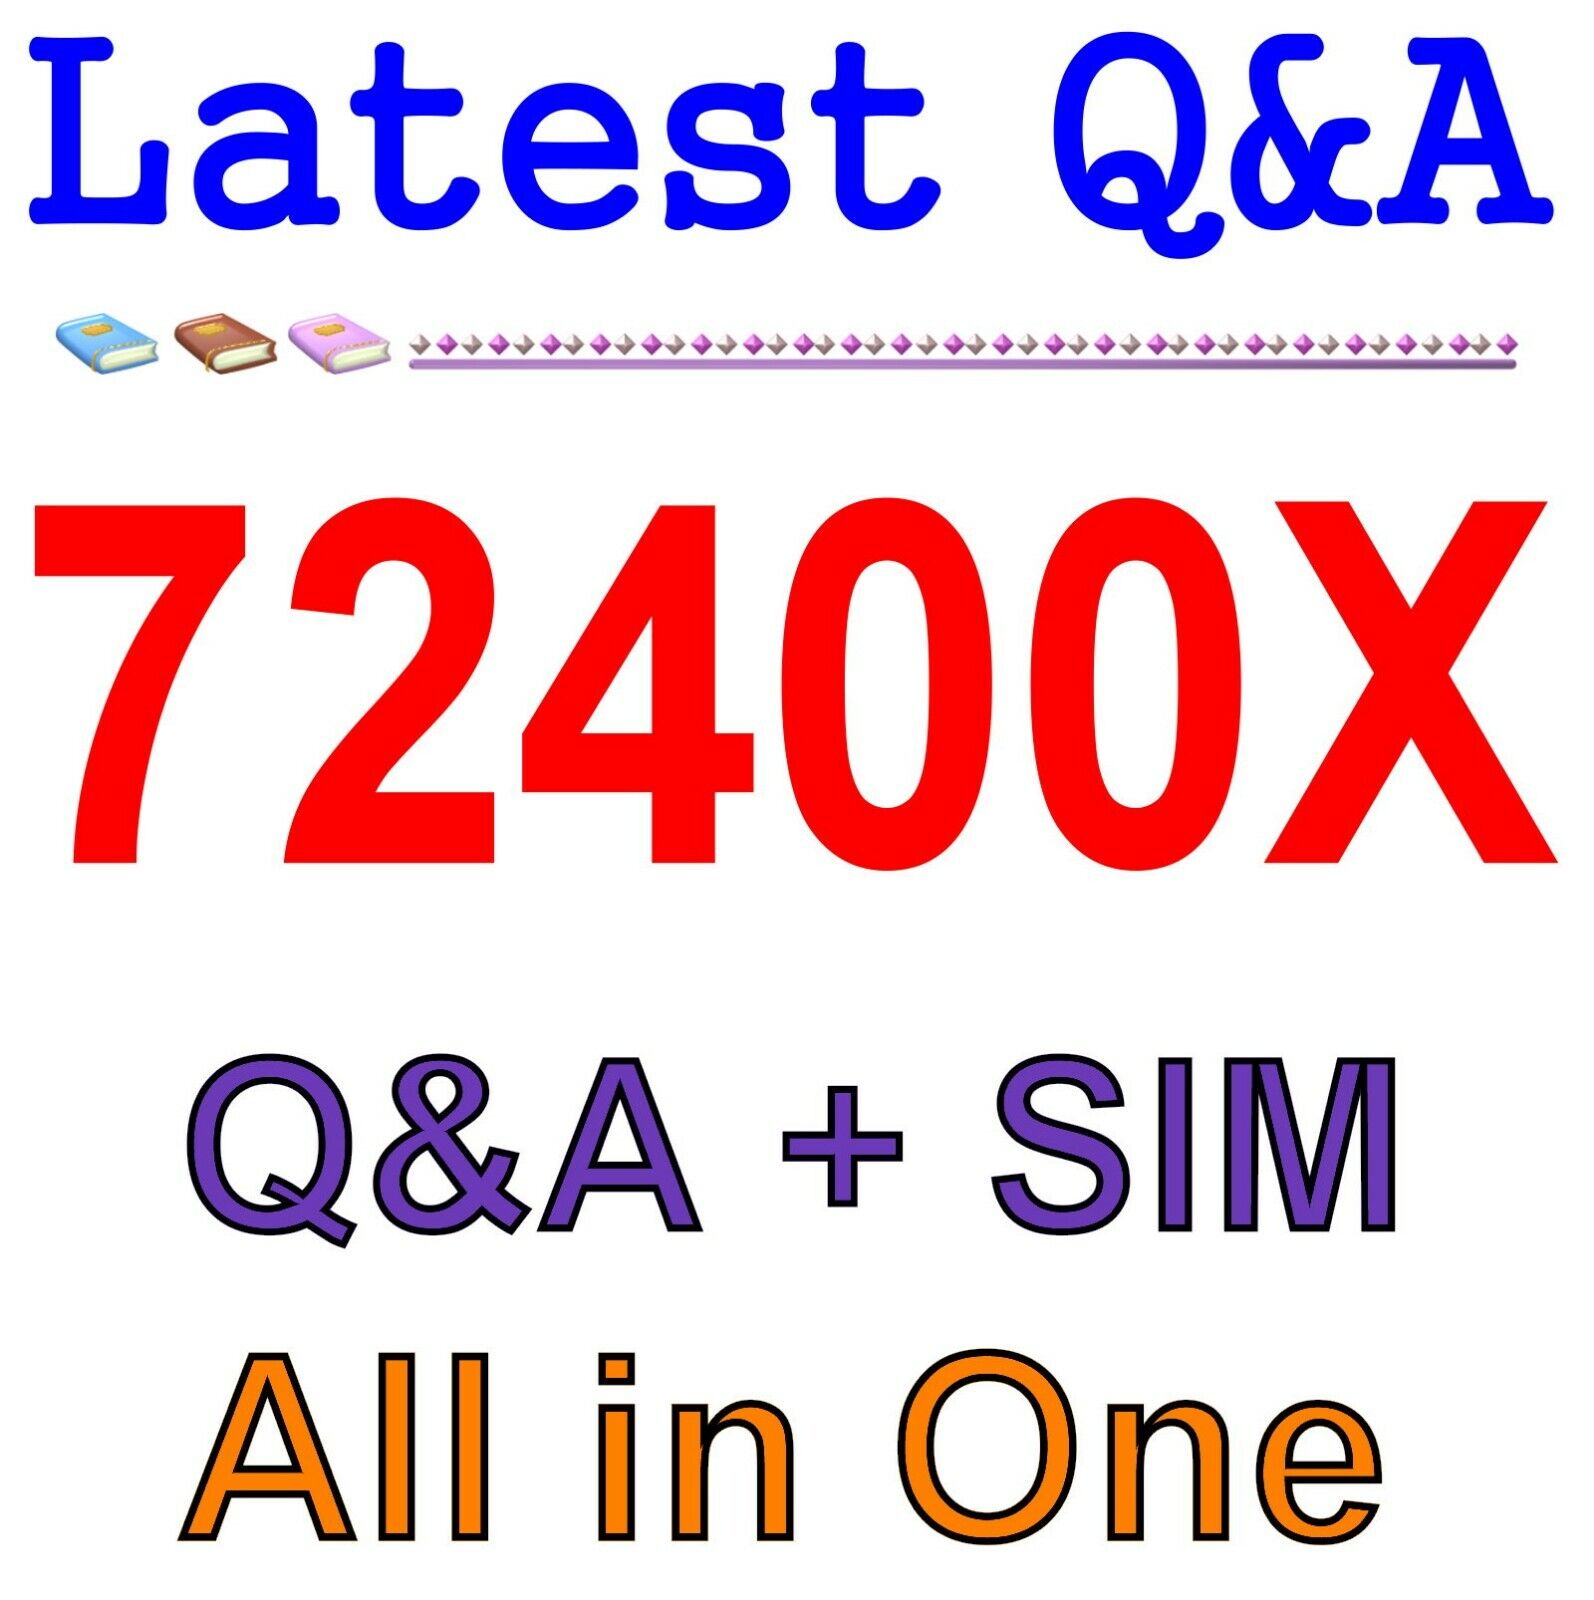 Avaya Equinox Solution with Avaya Aura Collaboration App 72400X Exam Q&A+SIM